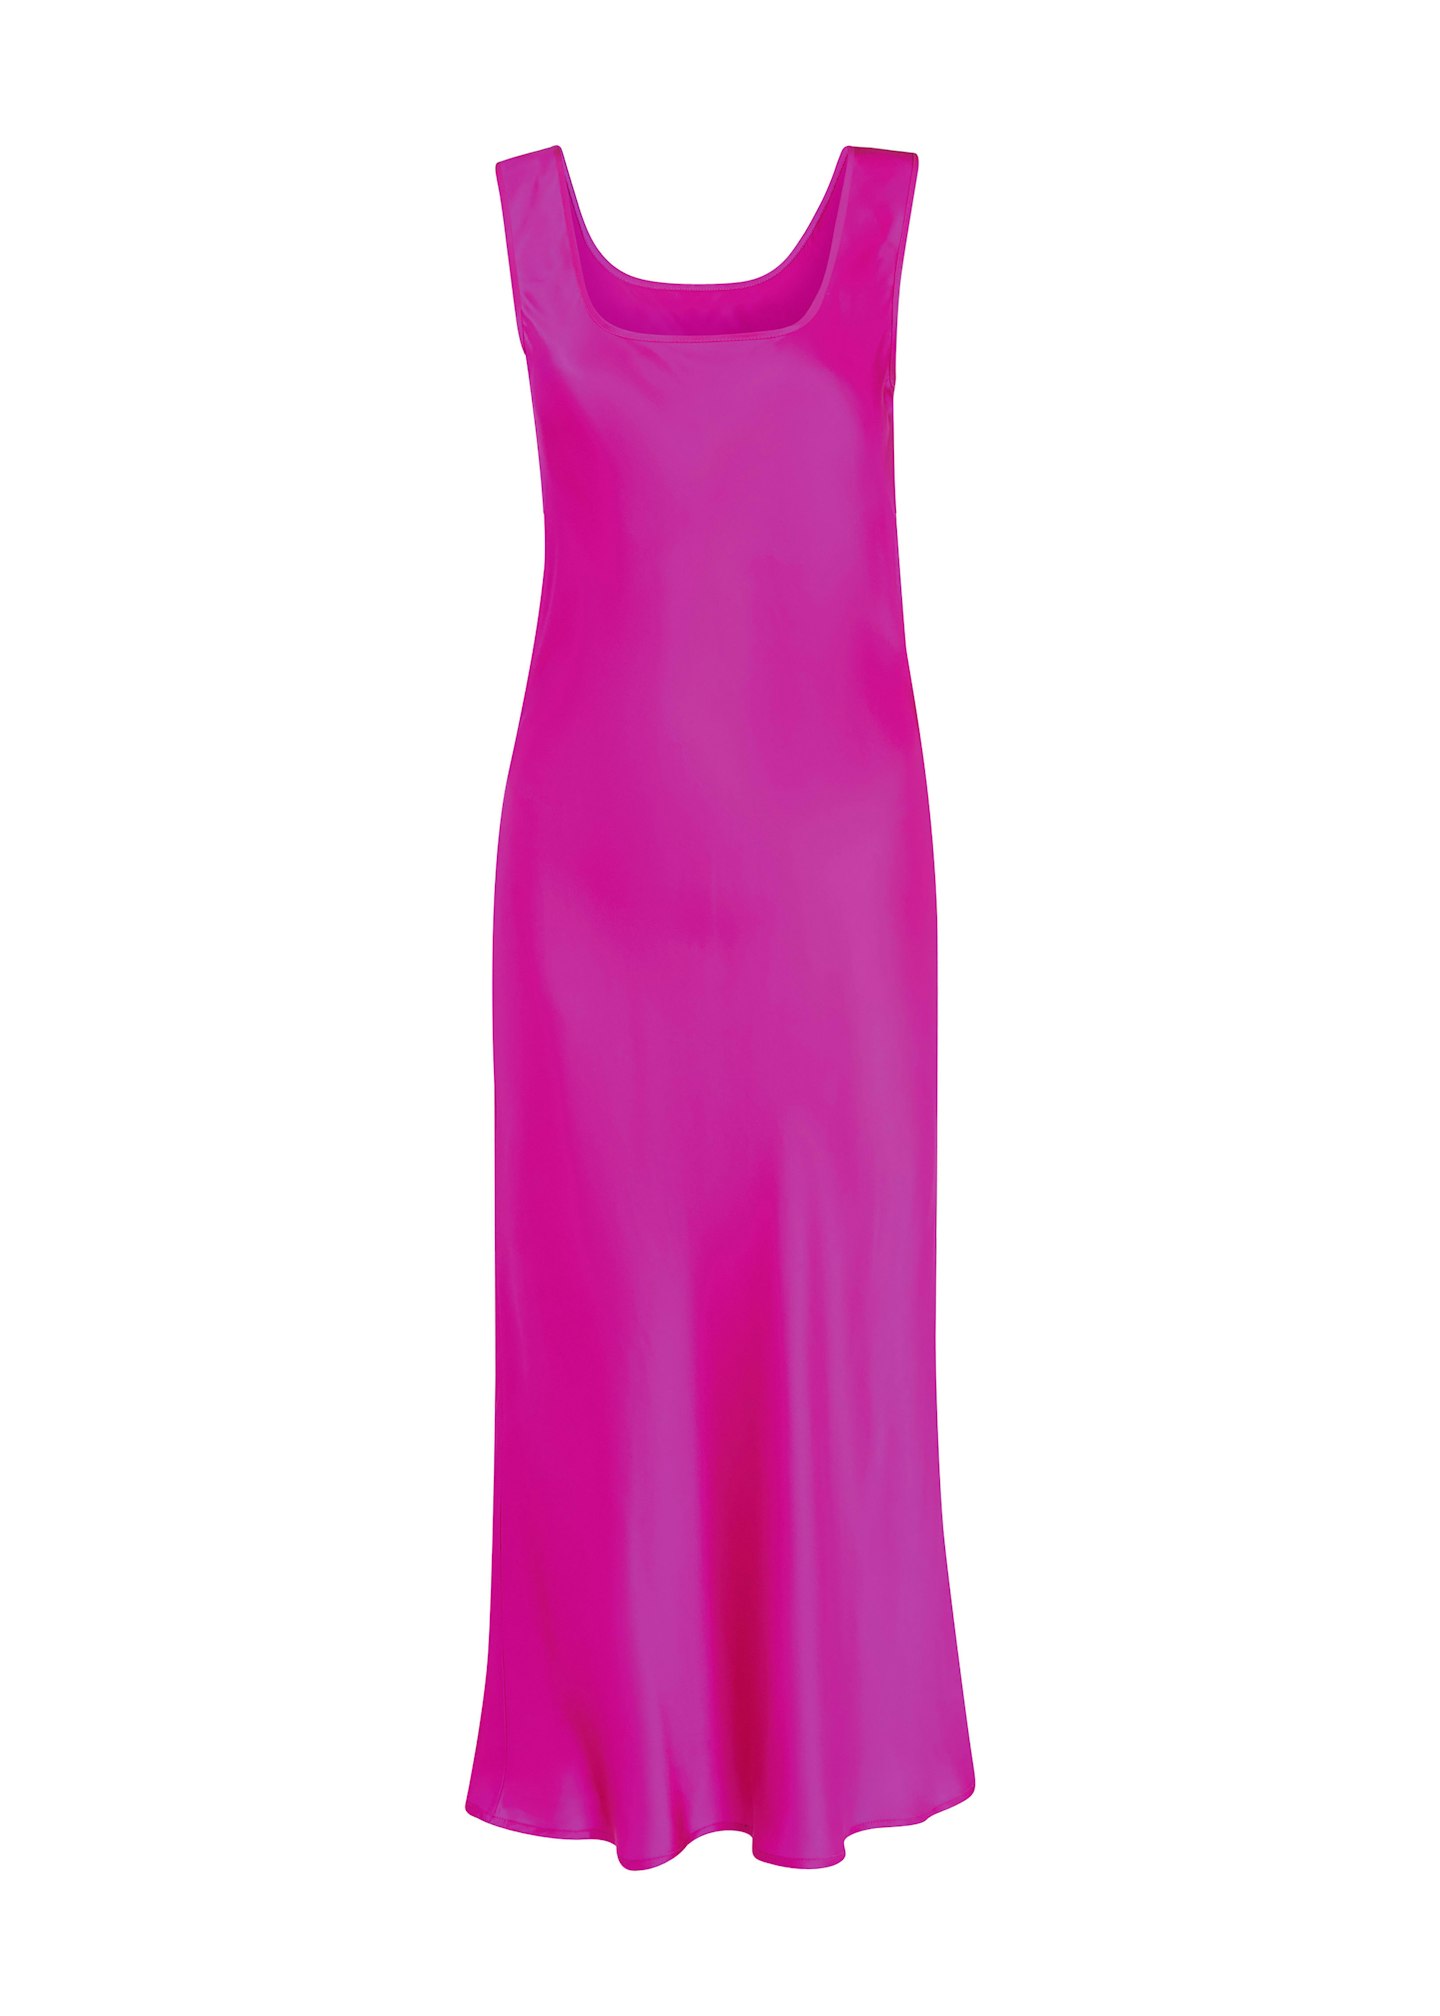 Whistles x Hai Collaboration  Slip Dress in Pink, £198